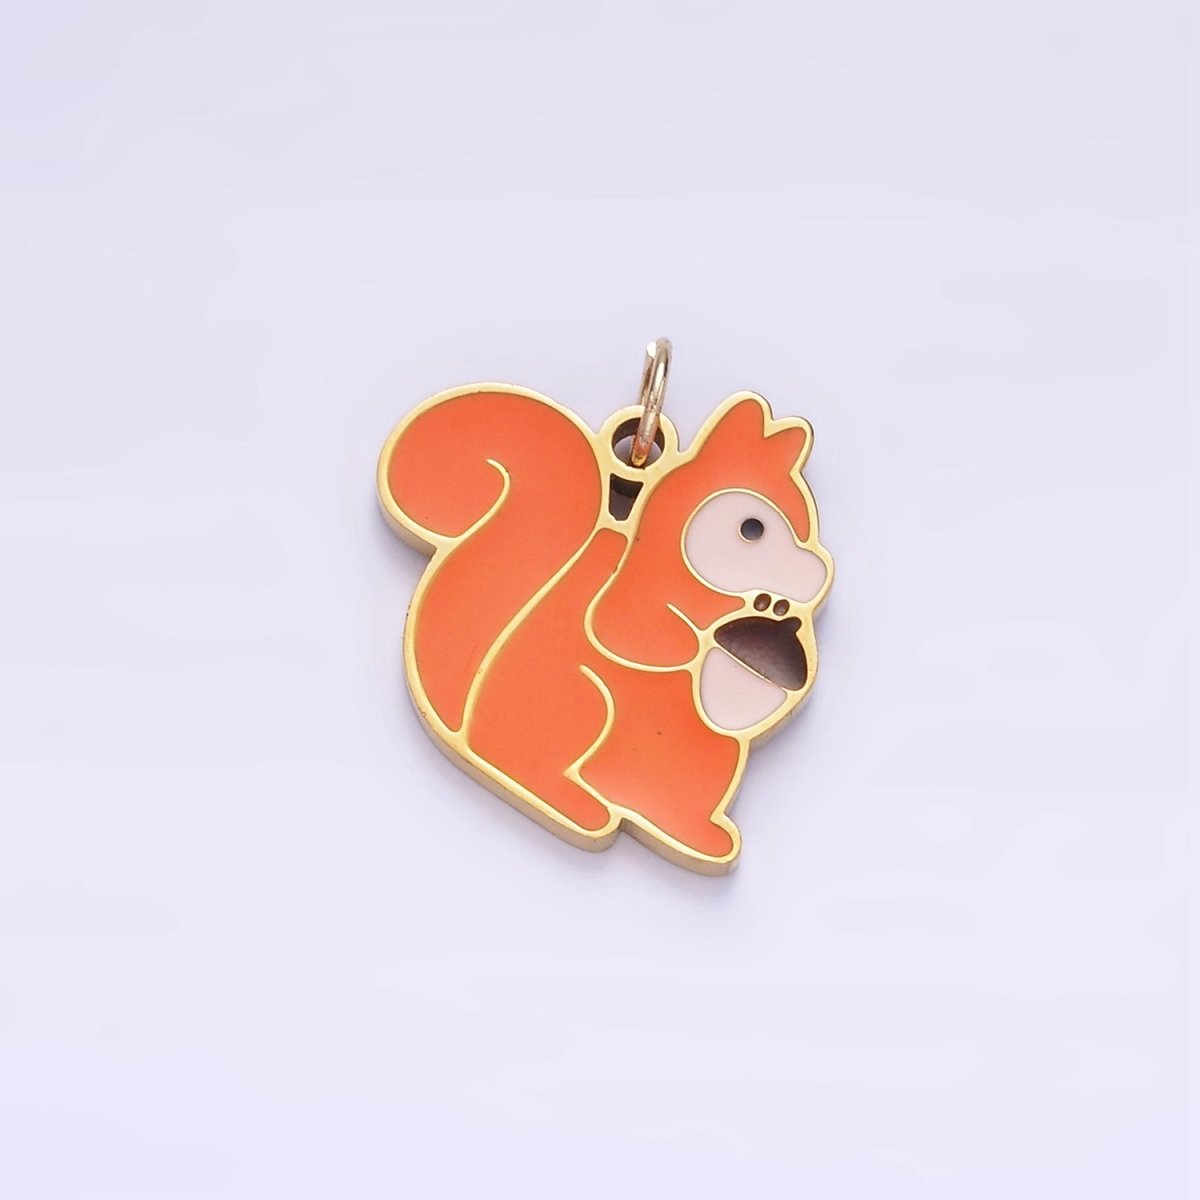 Stainless Steel Squirrel Charm Enamel Animal Kids Jewelry Pendant | P1002 - DLUXCA